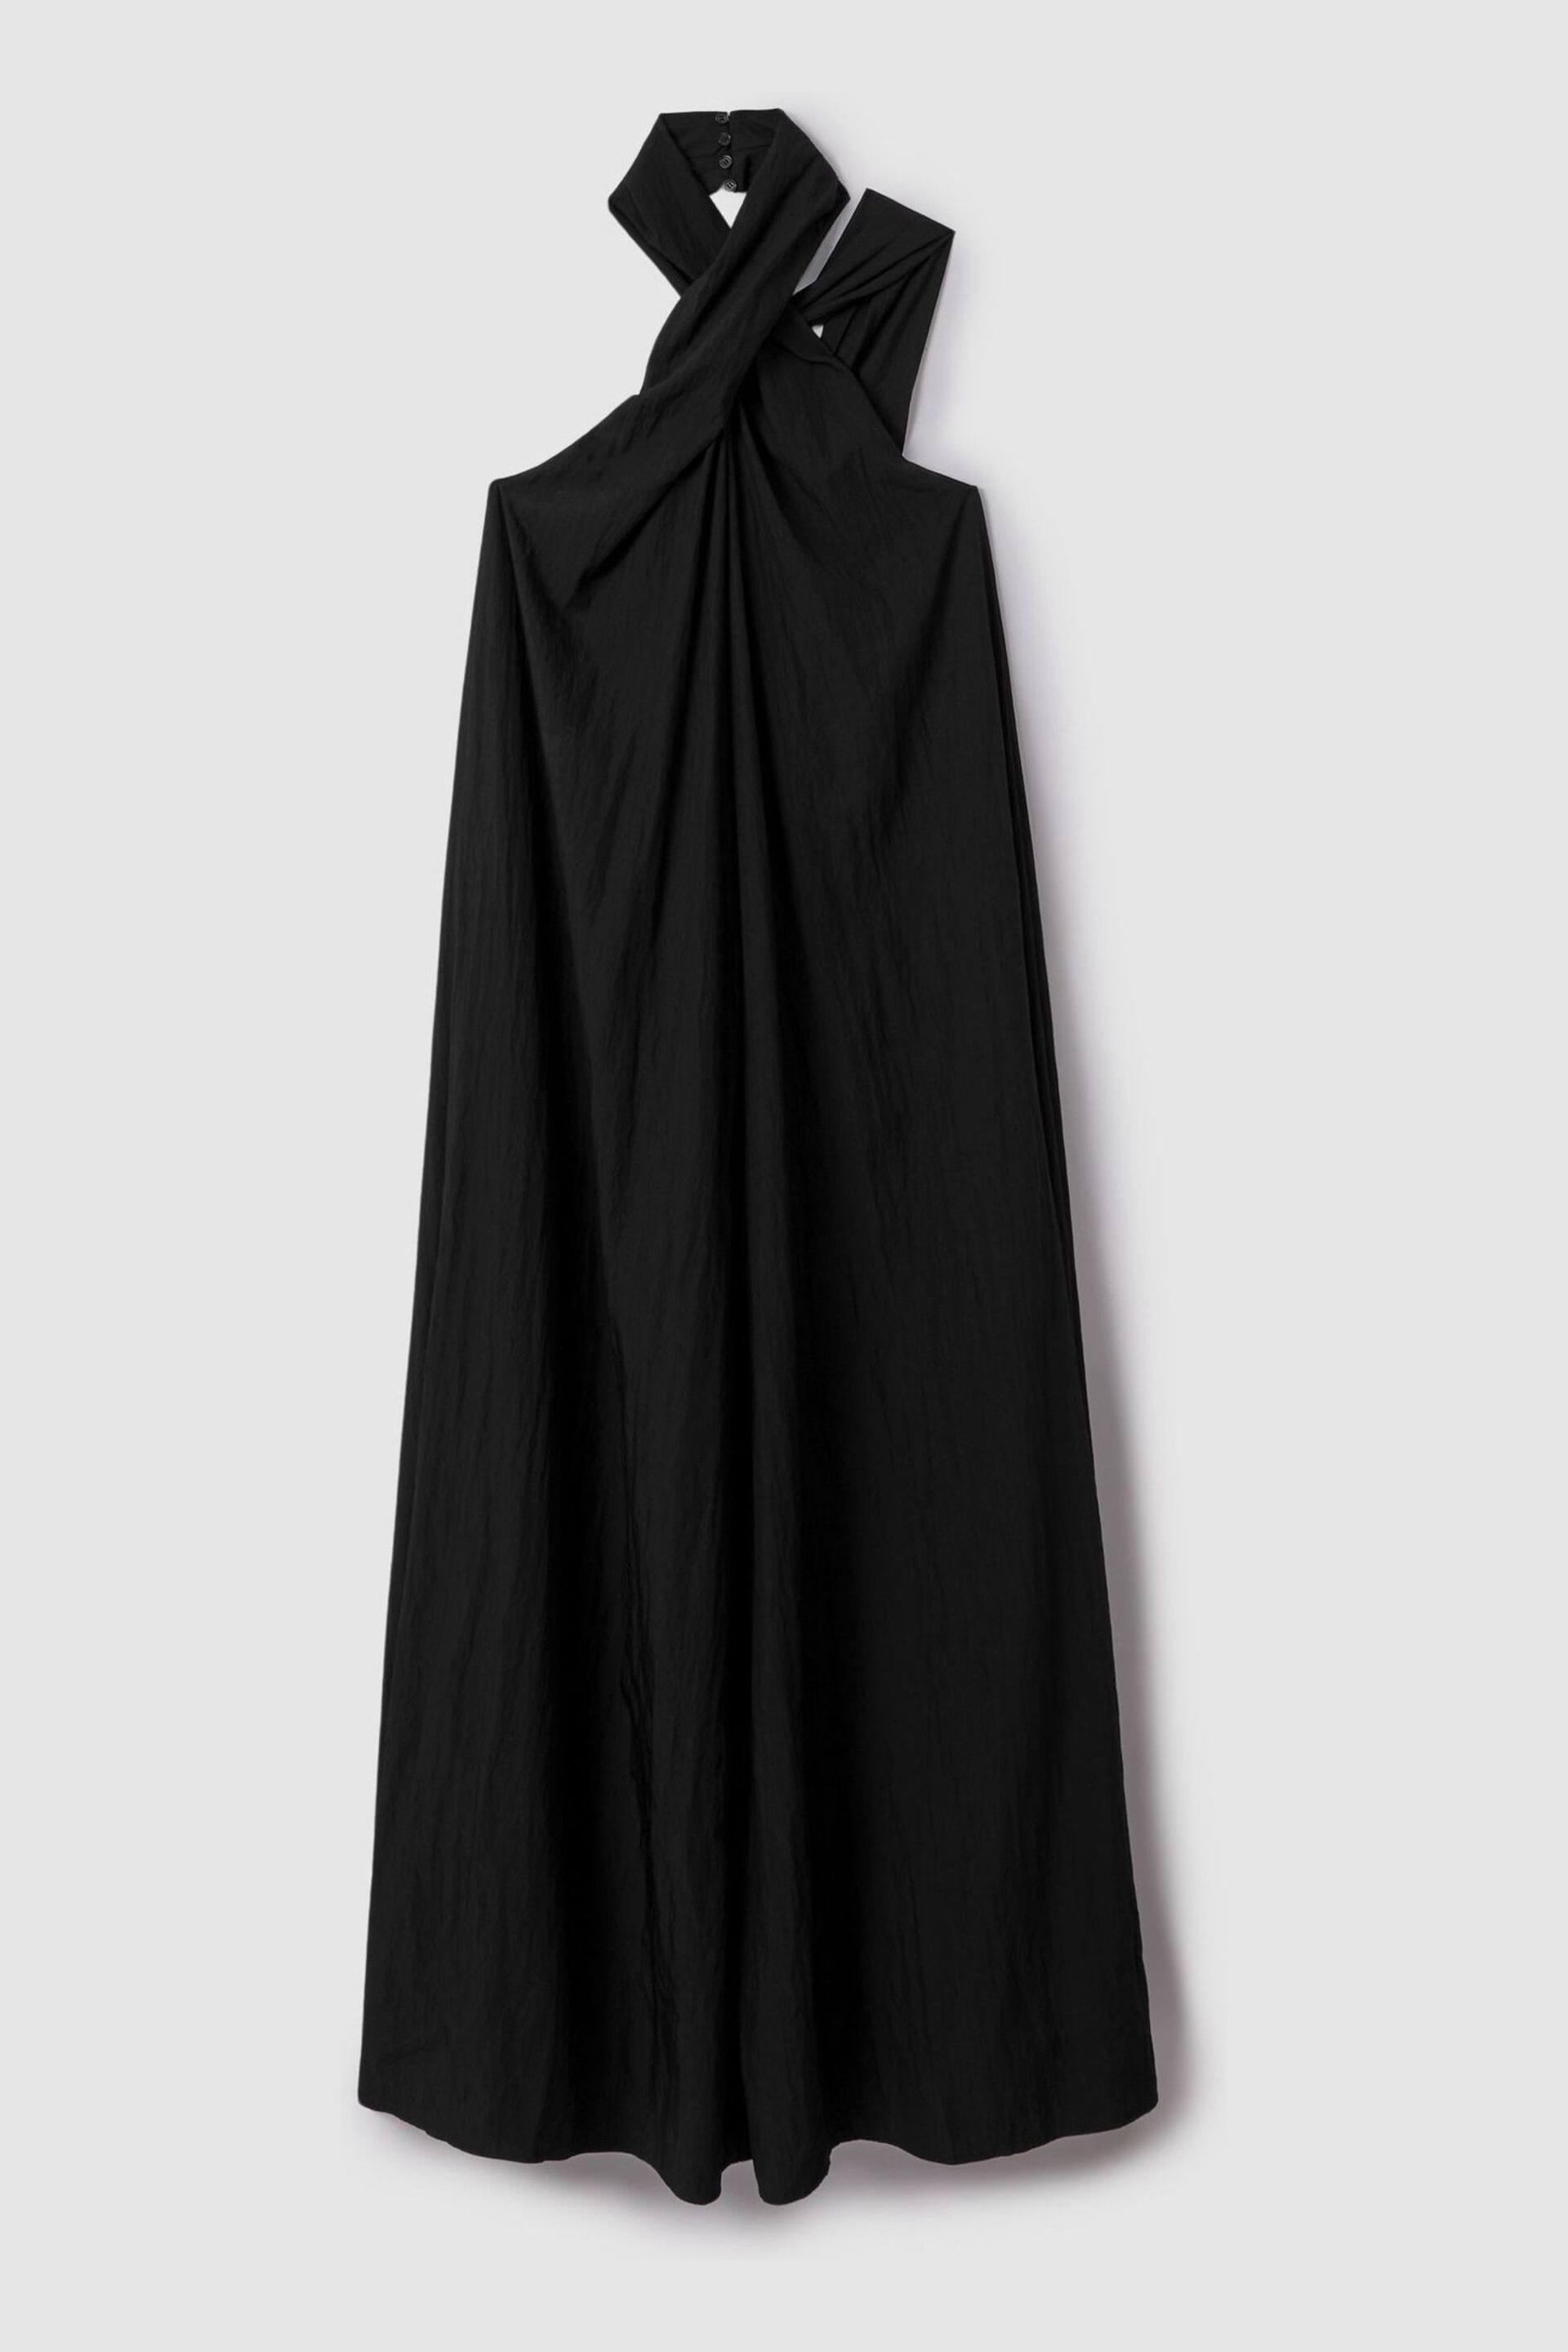 Reiss Black Phoebe Taffeta Halter Neck Maxi Dress - Image 2 of 6